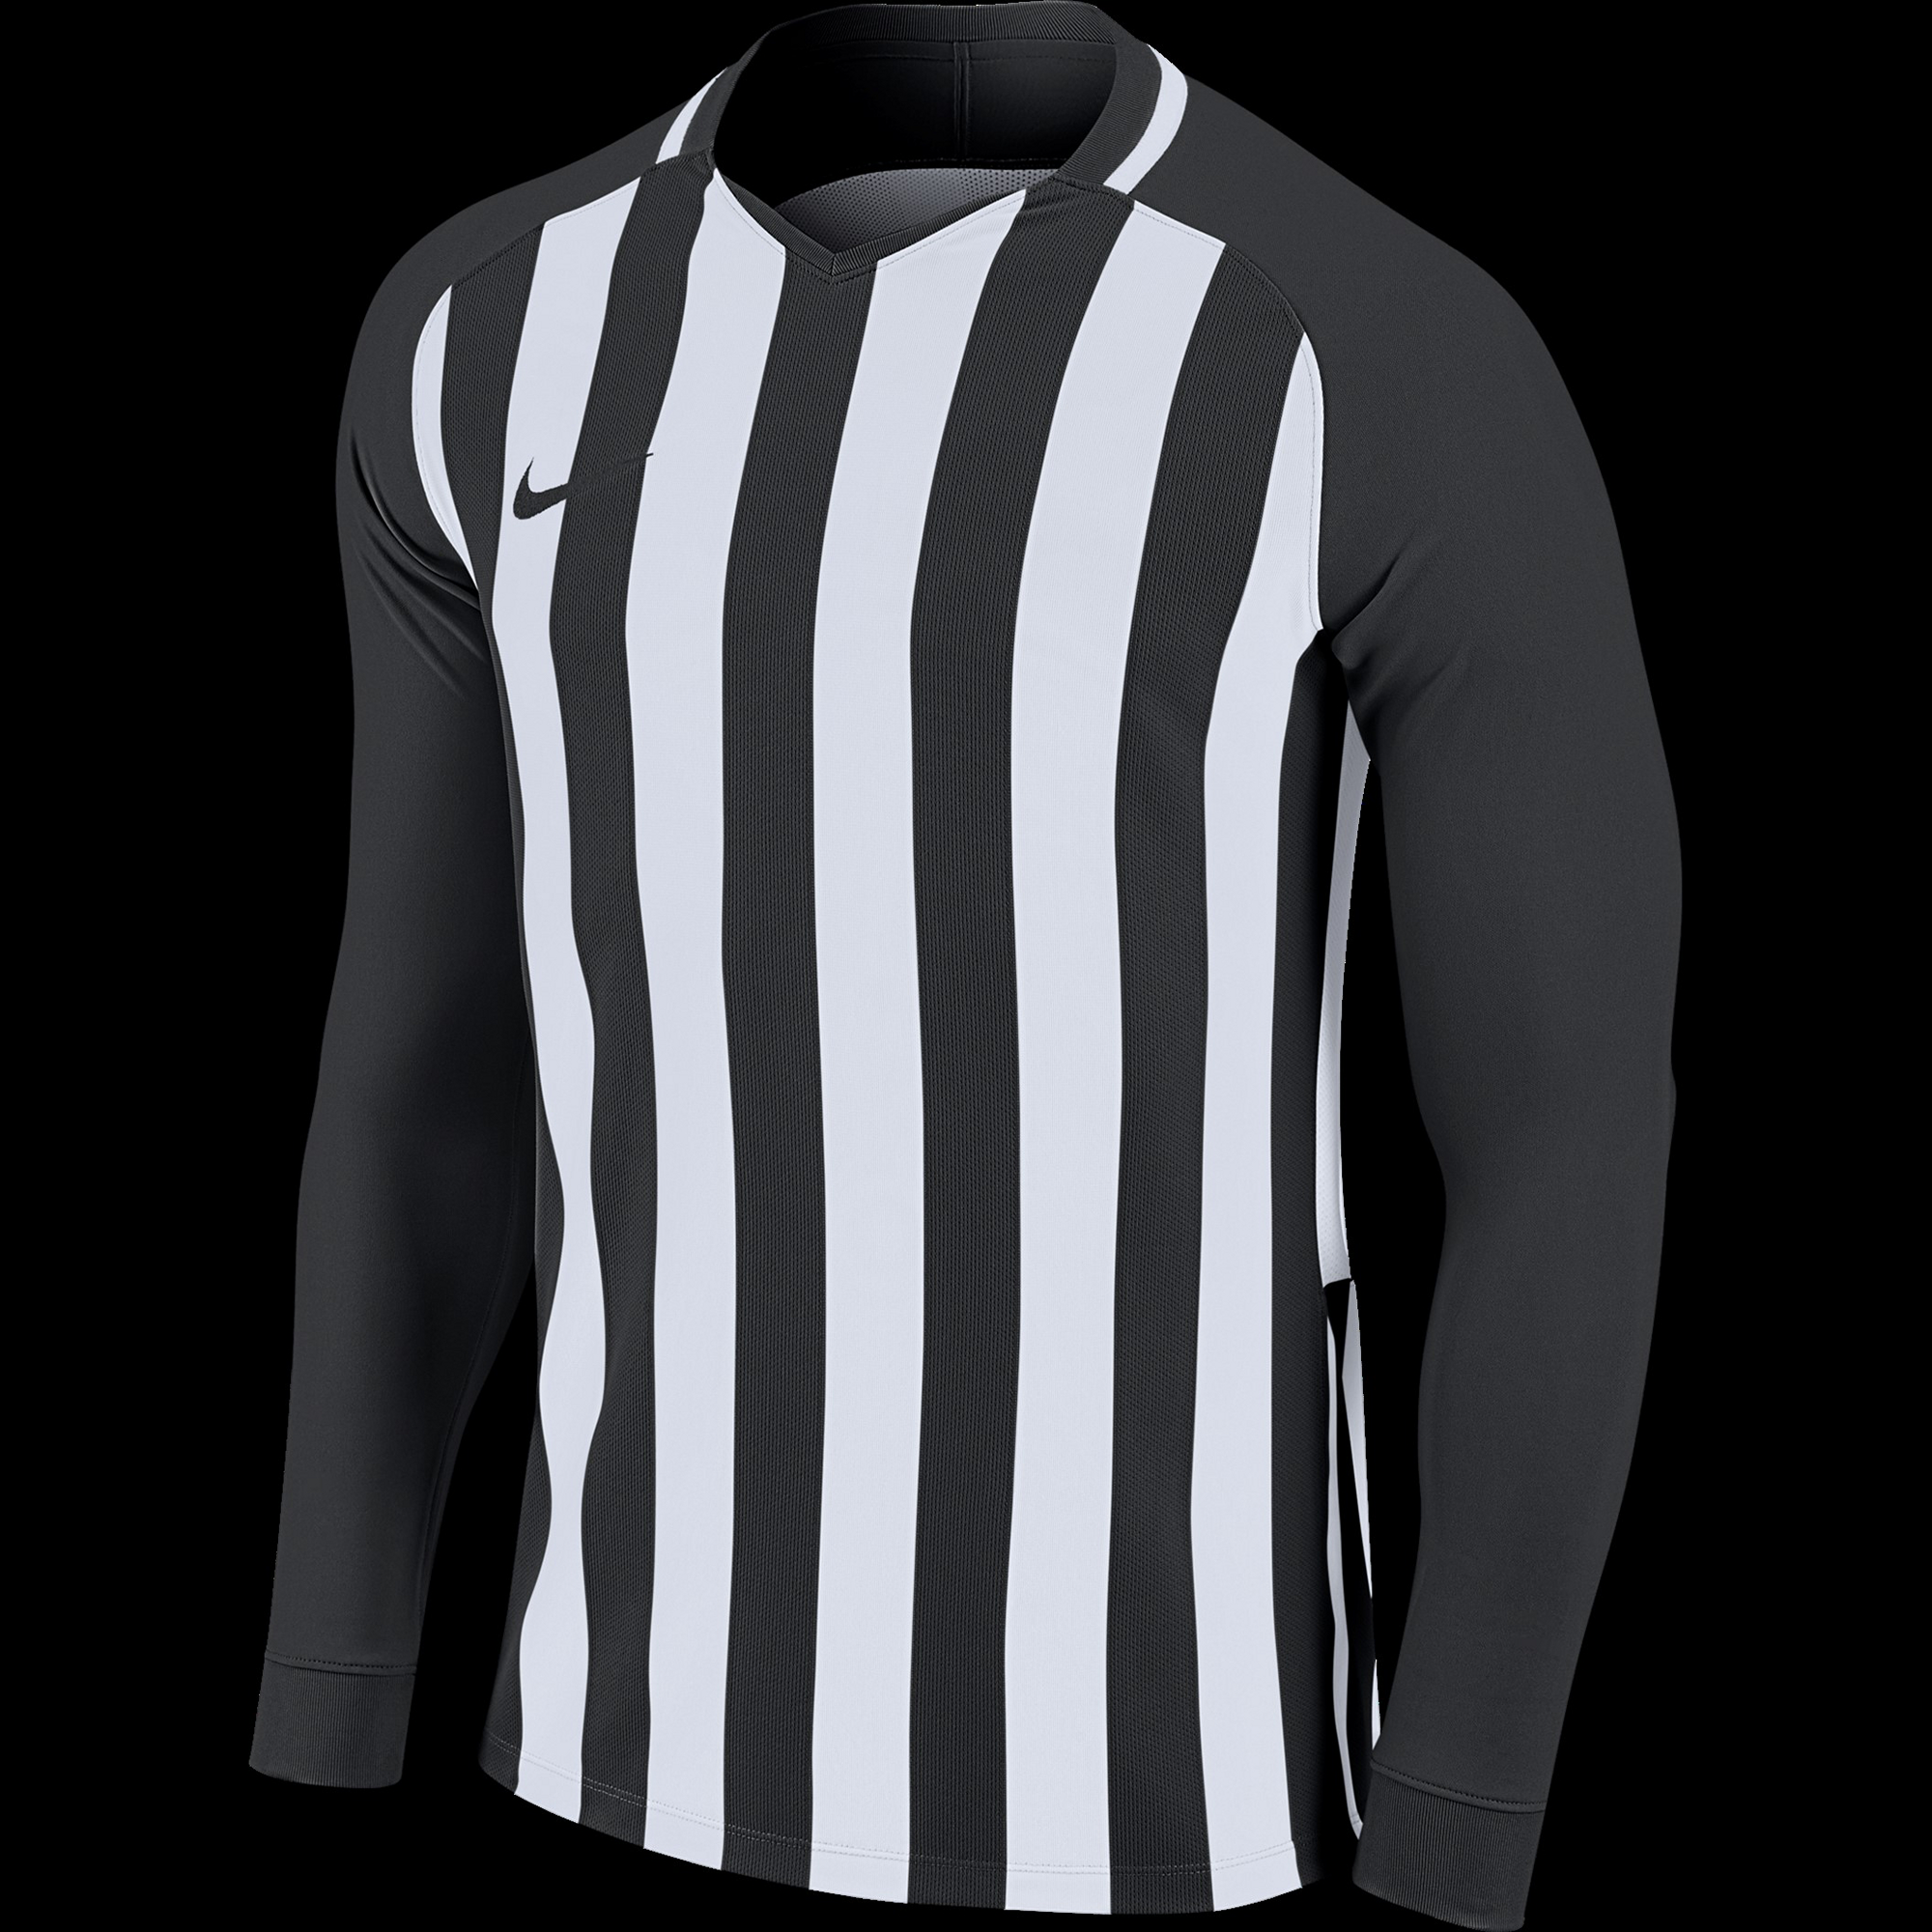 black and white striped nike shirt